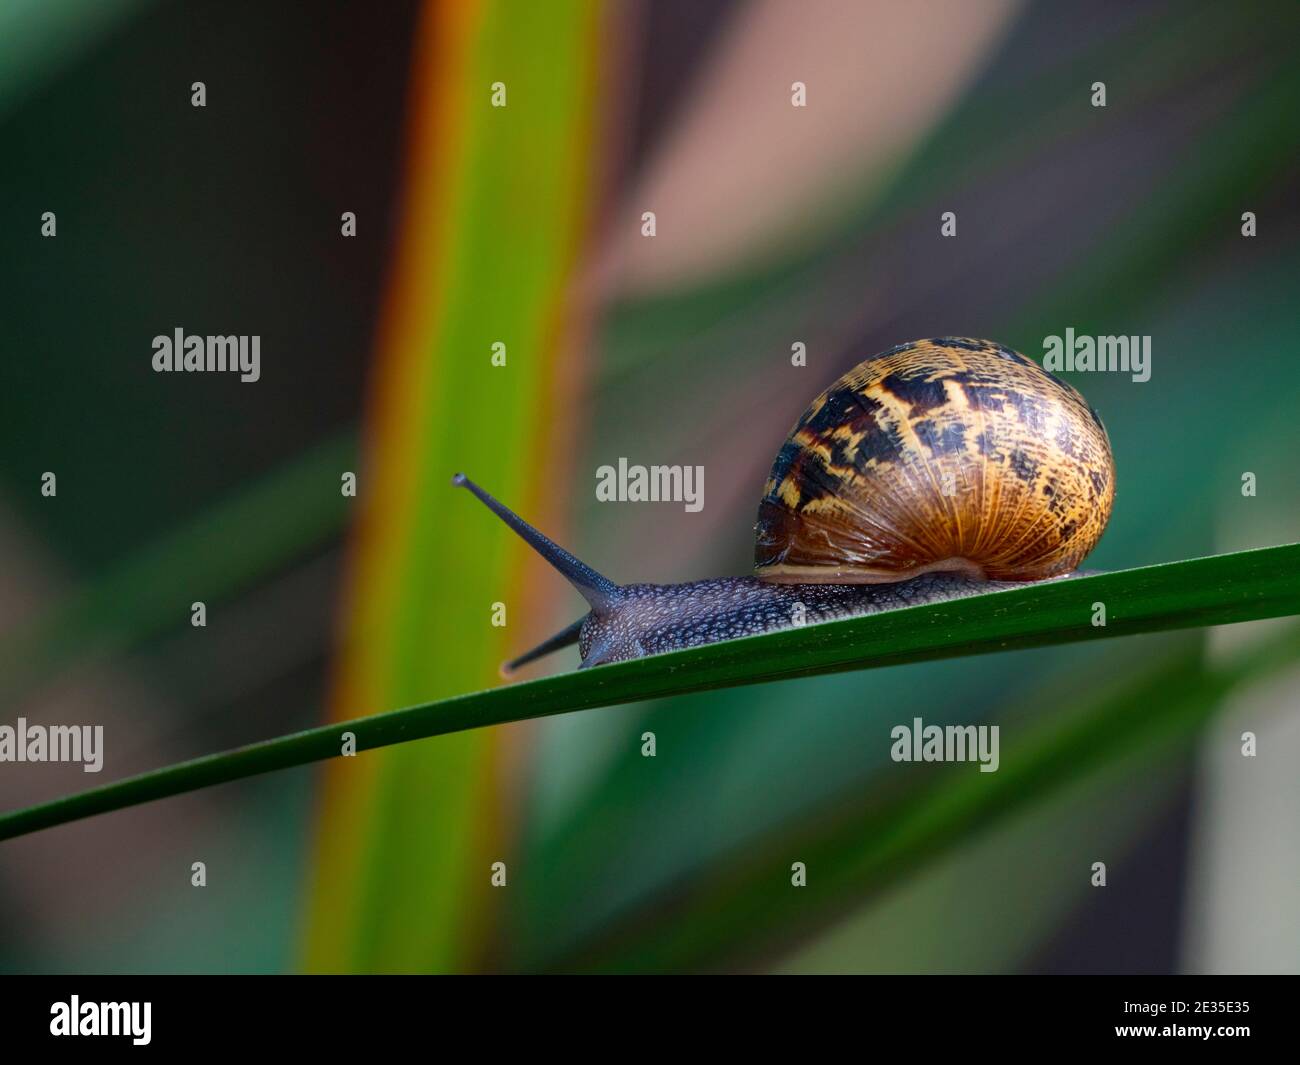 Common garden snail, Cornu aspersum, with body extended and shell climbing a grass stalk. Stock Photo